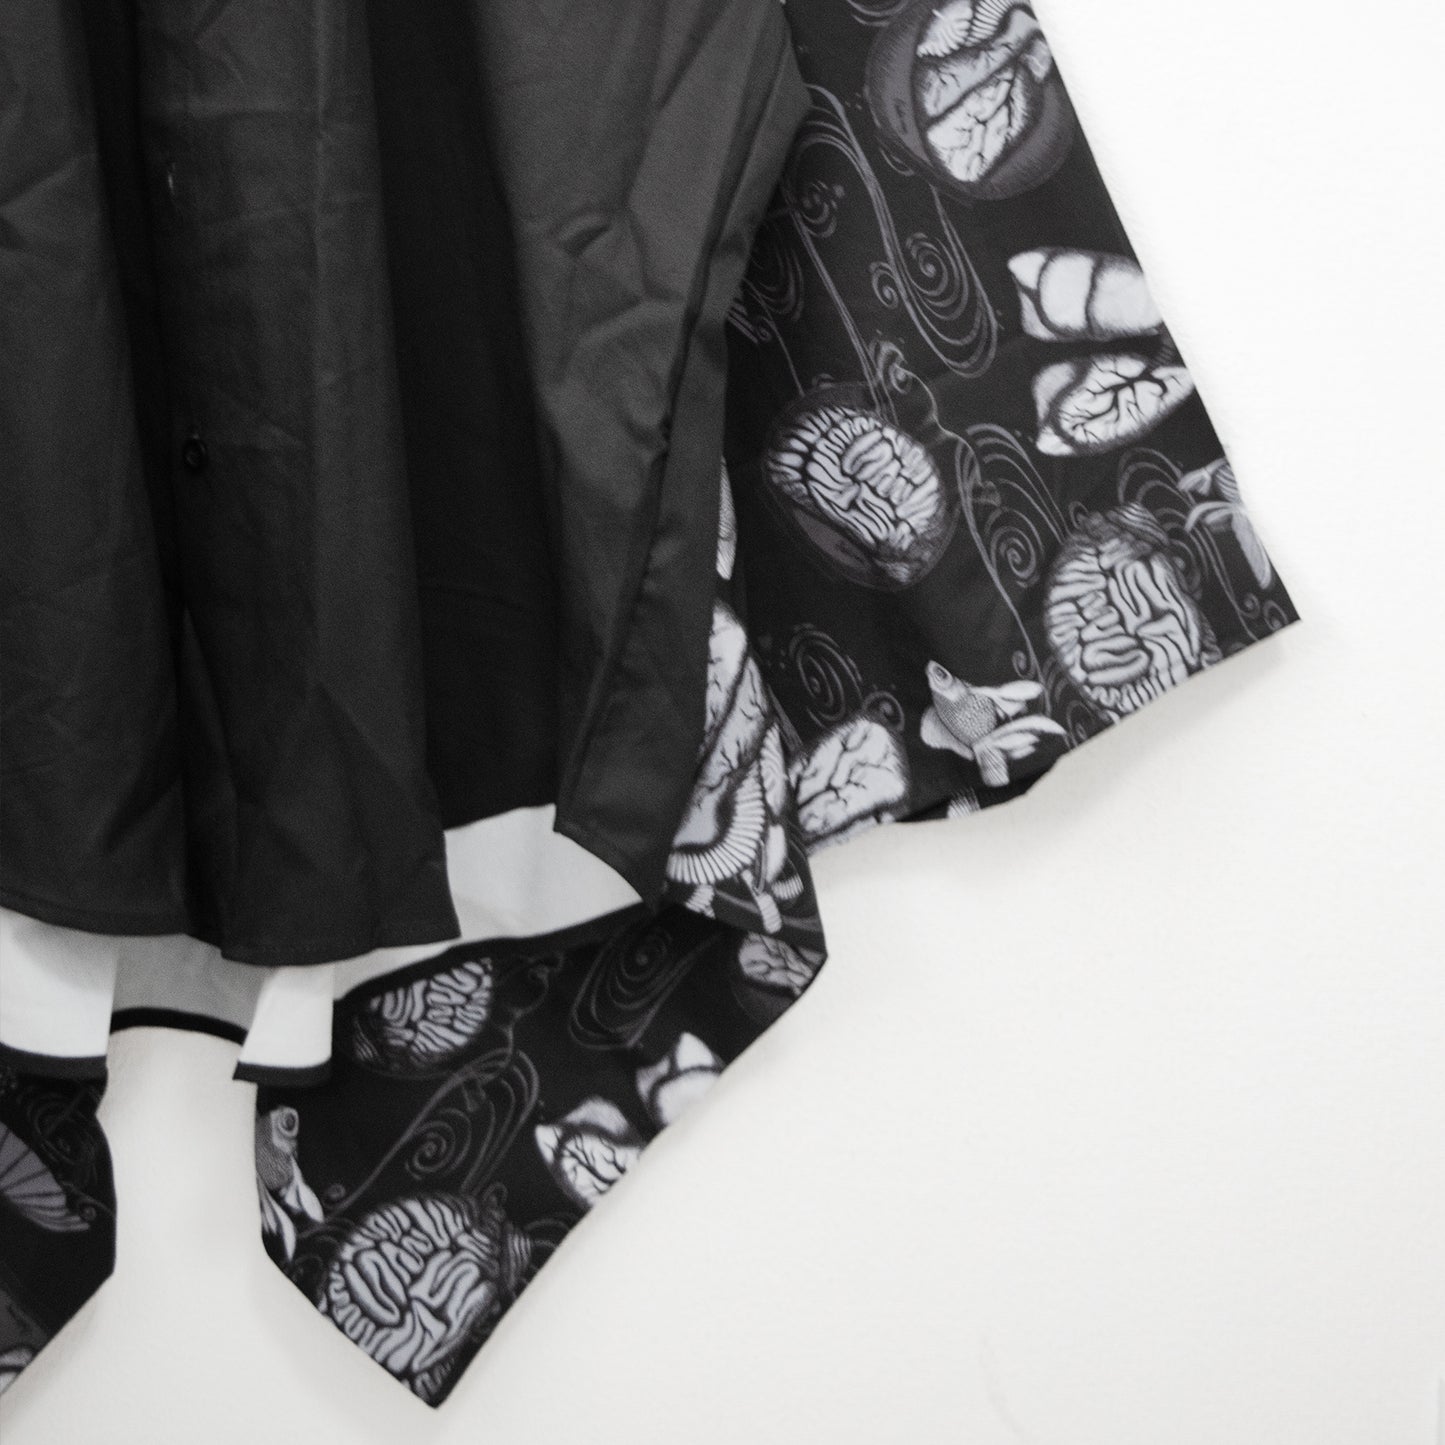 ACDC RAG and Water Kimono Long Sleeve Shirt GRAY Gray - YOUAREMYPOISON